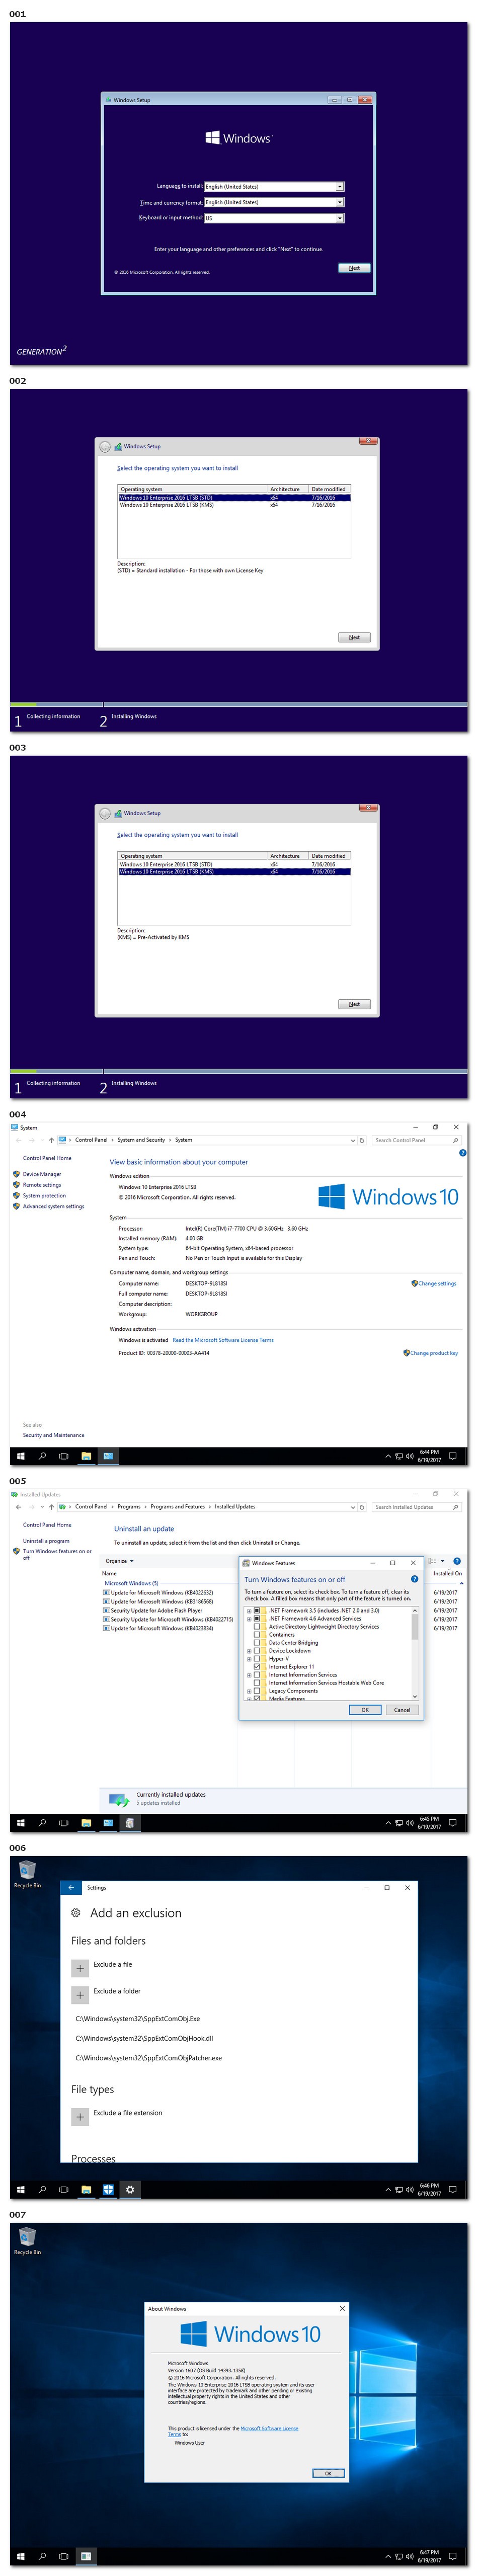 Windows 10 Enterprise (X64) 2016 LTSB MULTi-20 June 2017 1706251449100105